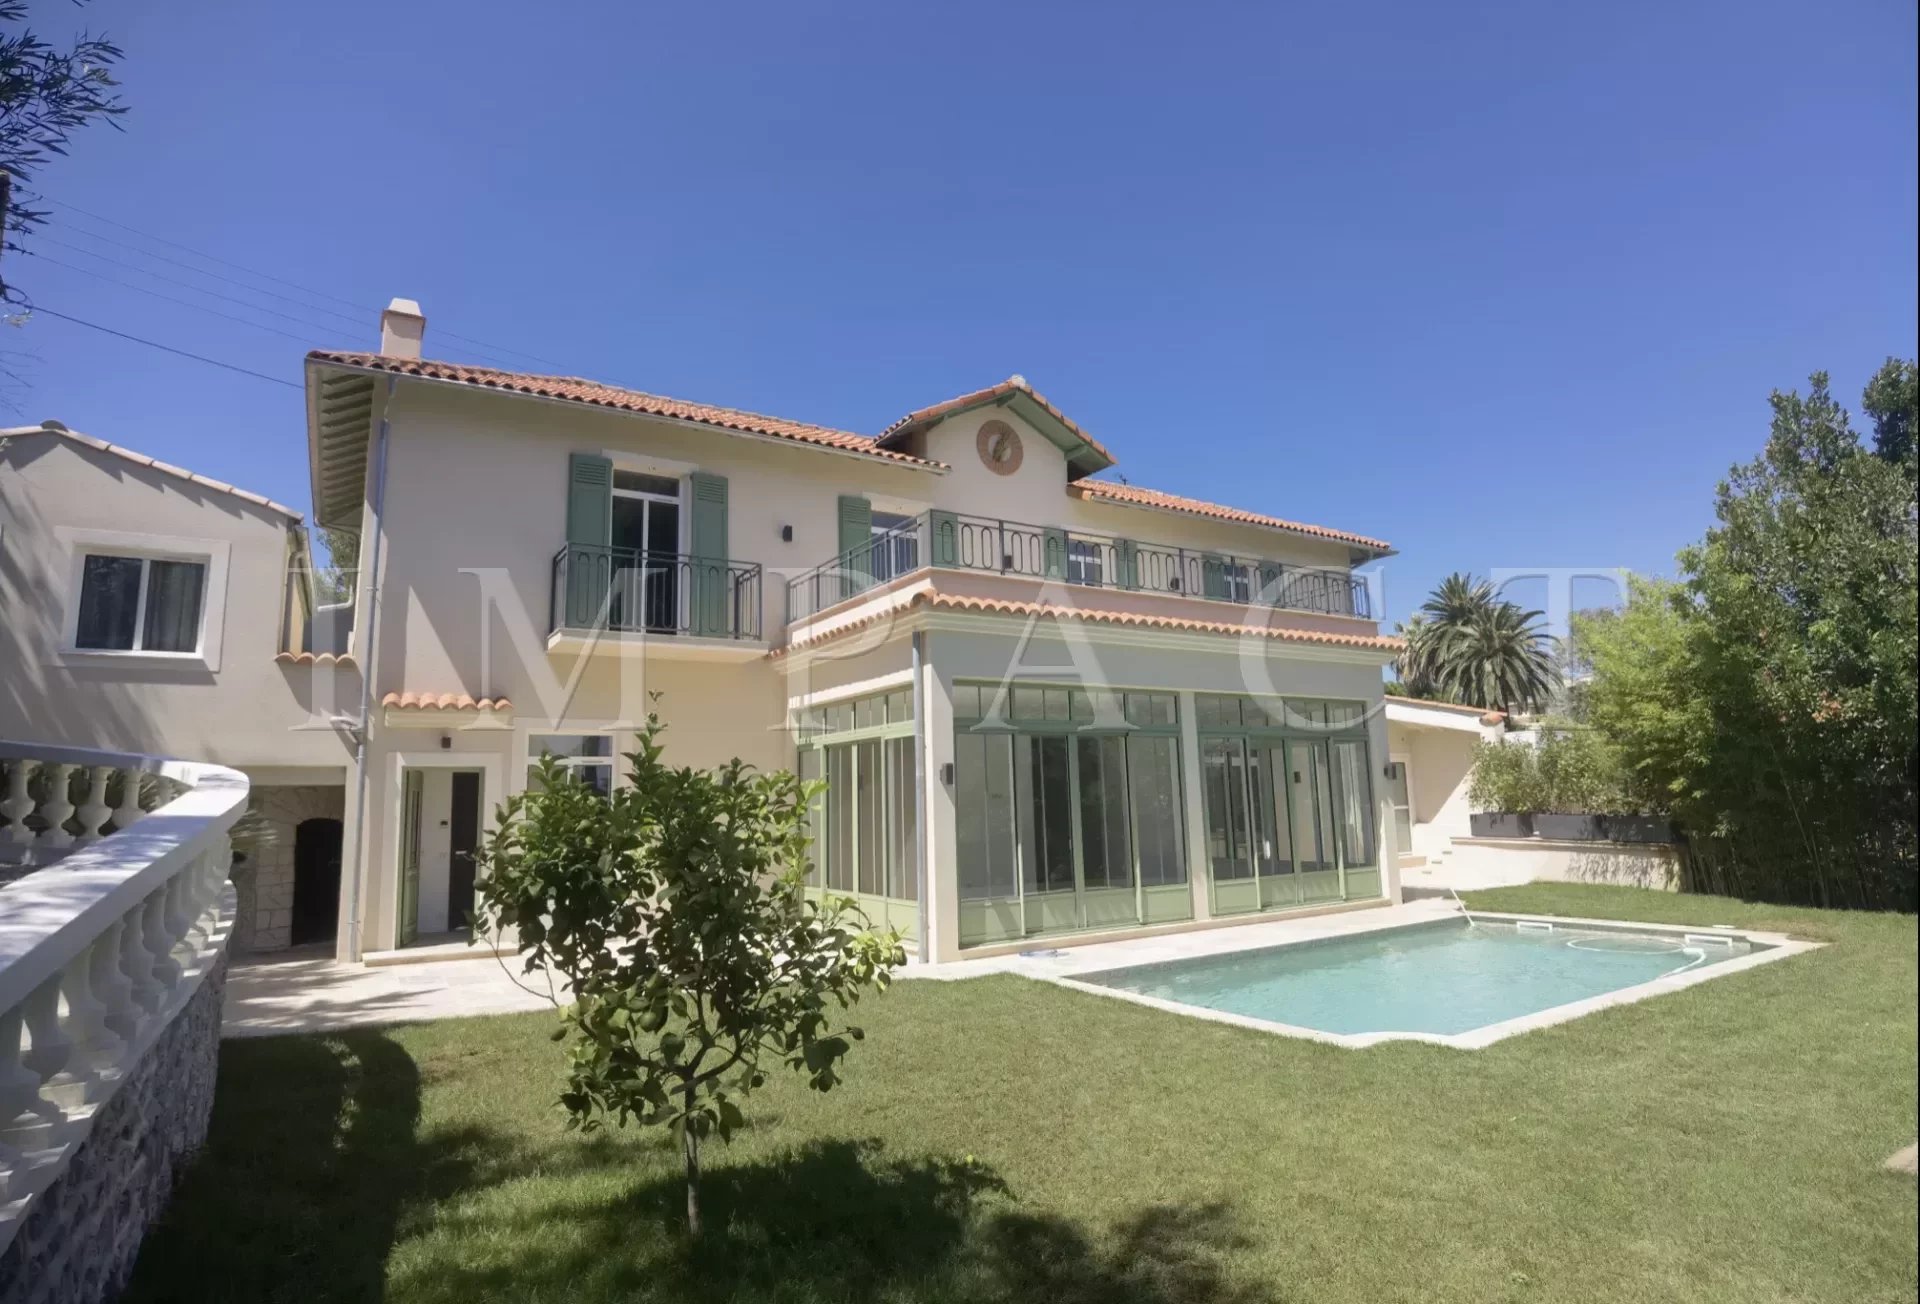 Rostagne neighborhood/ beginning of Cap d'Antibes, fully renovated villa for sale